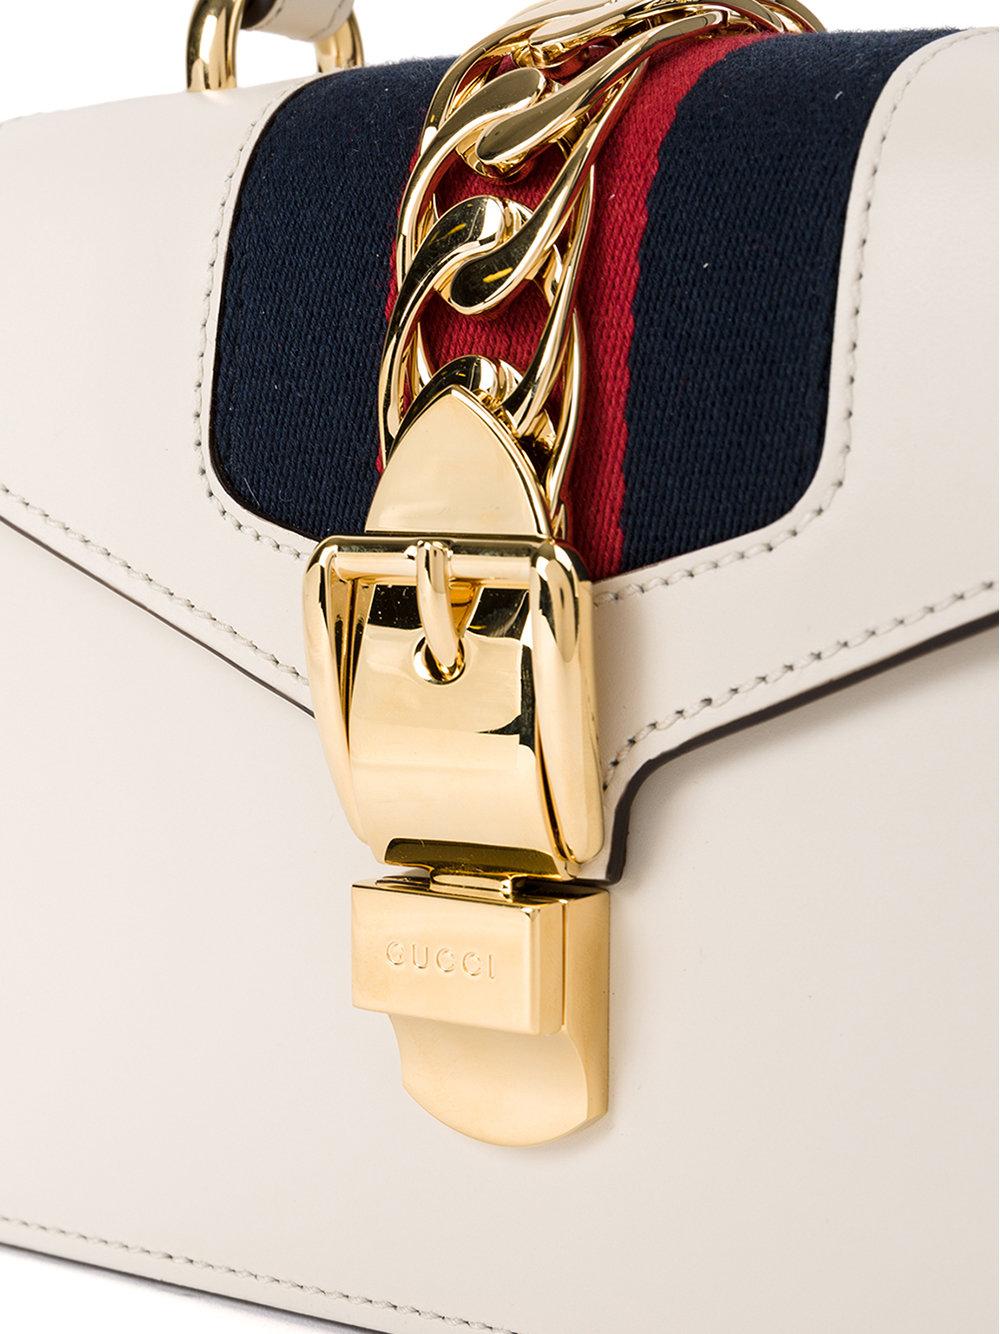 Lyst - Gucci Gold Buckle Shoulder Bag in White